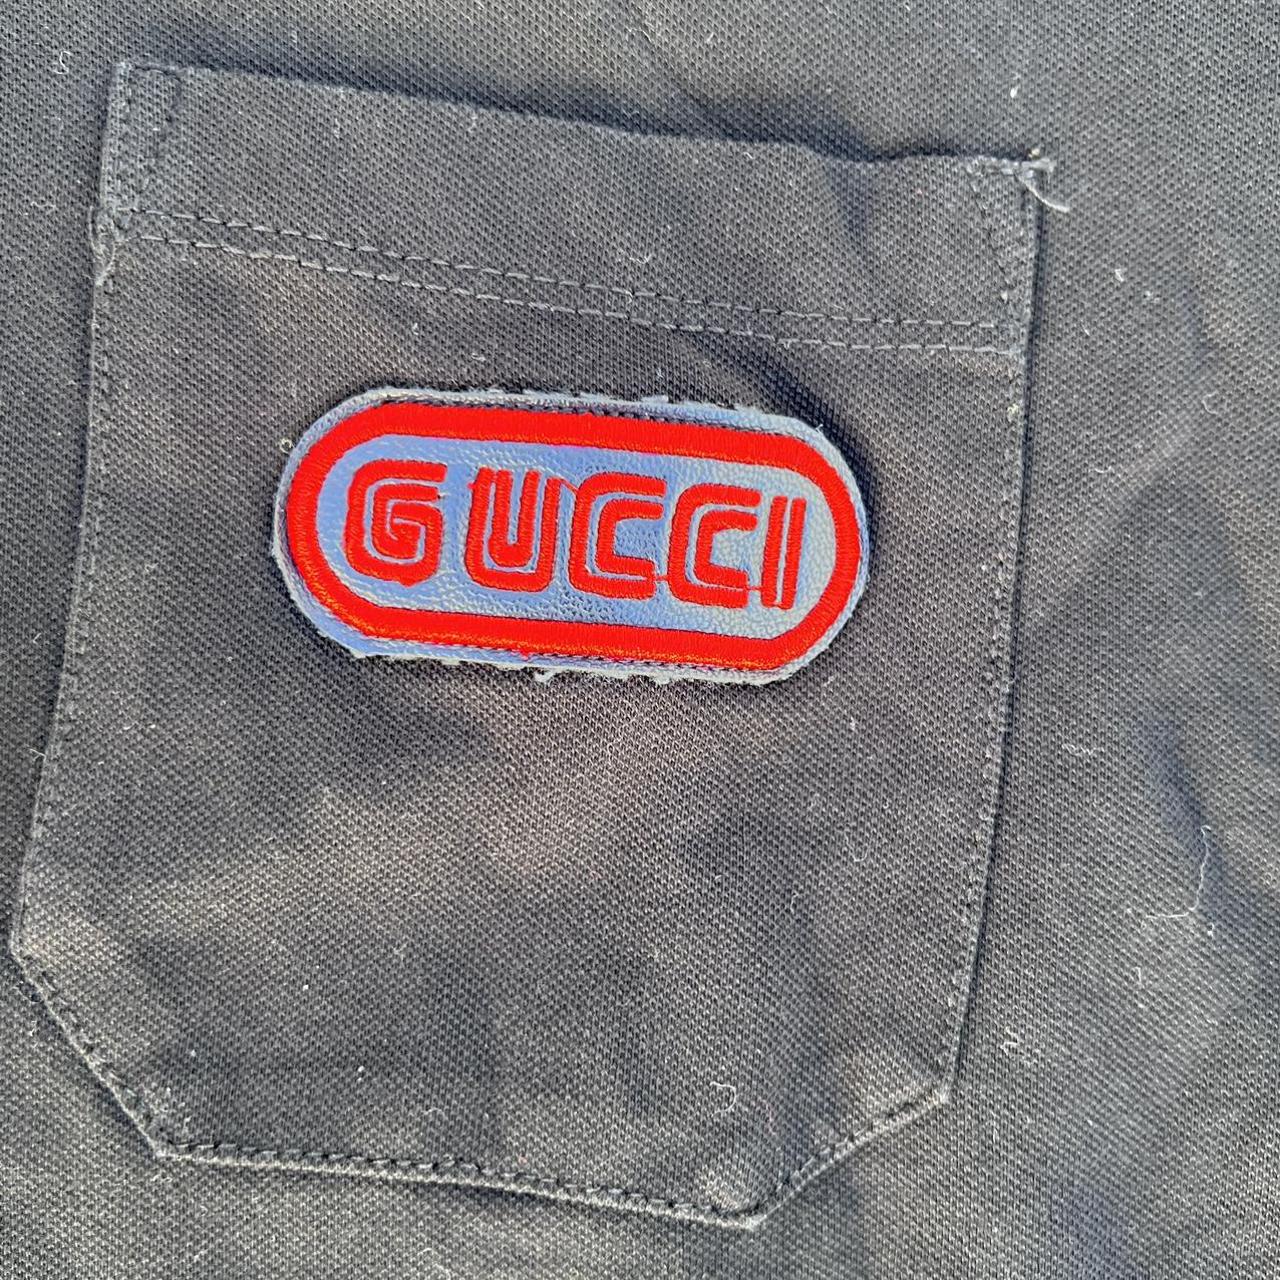 Gucci collar shirt #gucci #hype #designer - Depop